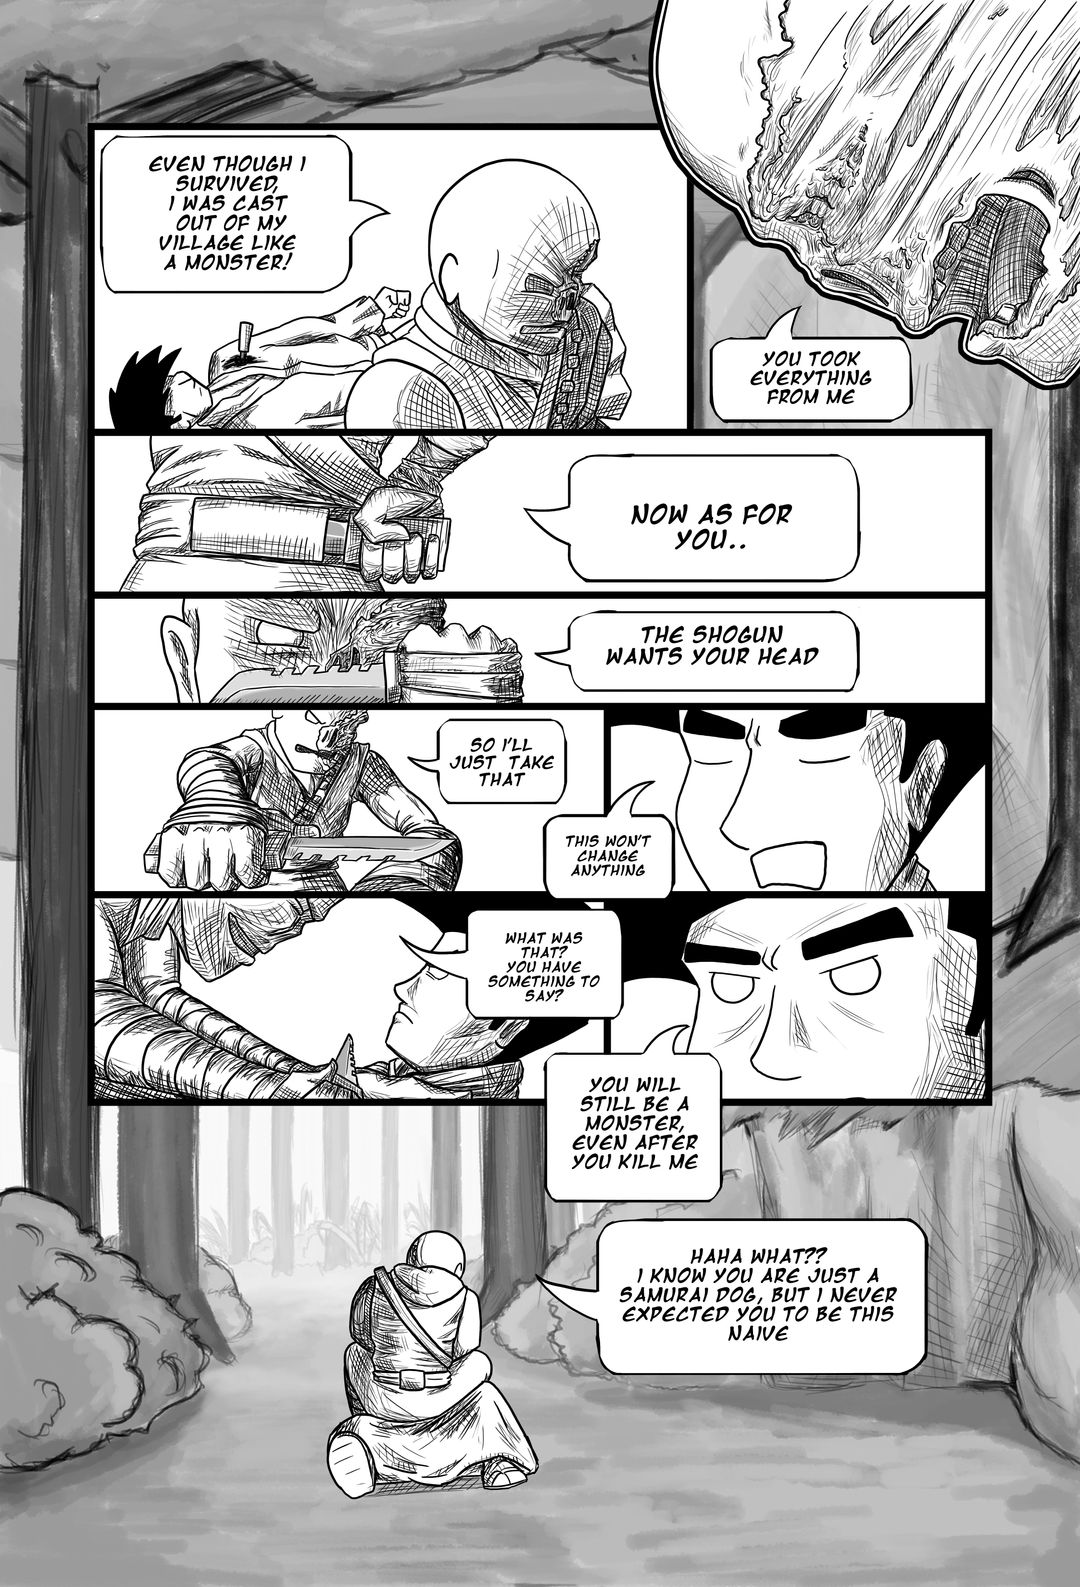 Shotgun Samurai 18 panel 1